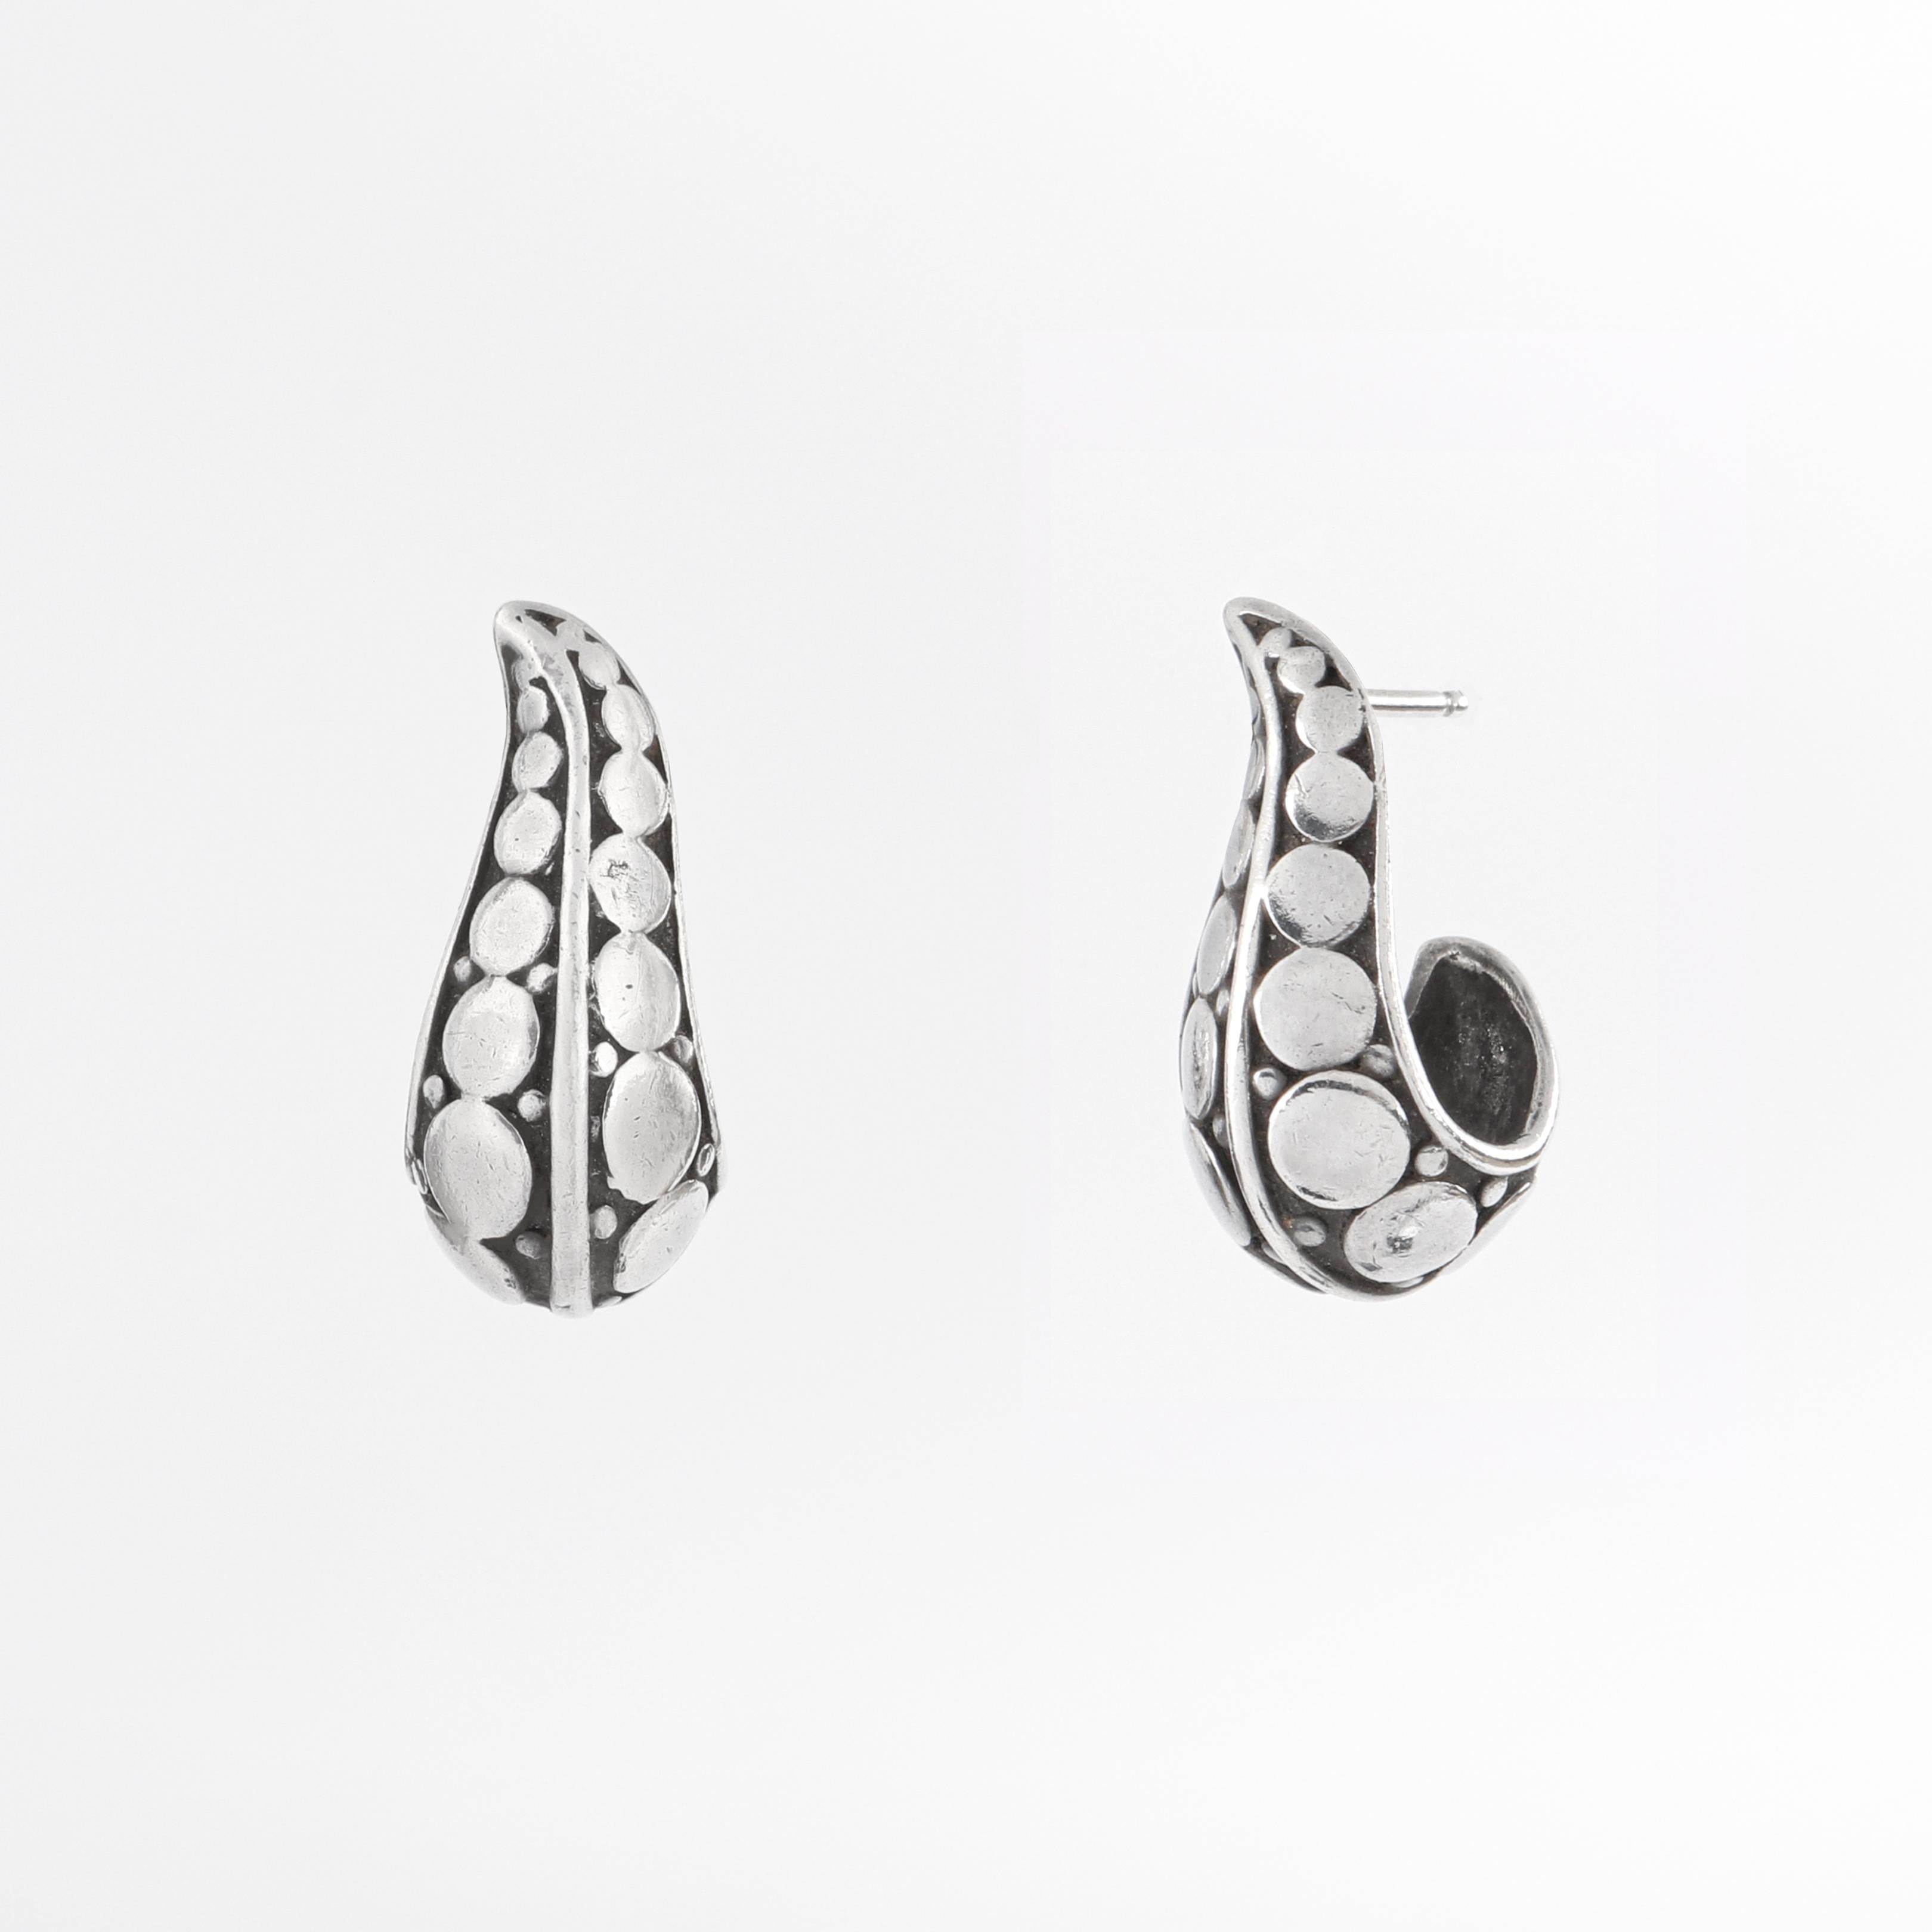 JOHN HARDY “Dot” Silver Black Carved Geometric Circle J Hoop Pierced Earrings
 
Brand / Manufacturer: John Hardy
Collection: “Dot” Collection
Style: J Hoop earrings
Color(s): Silver, black
Unmarked Material: Earring Body: Silver;  Backing: